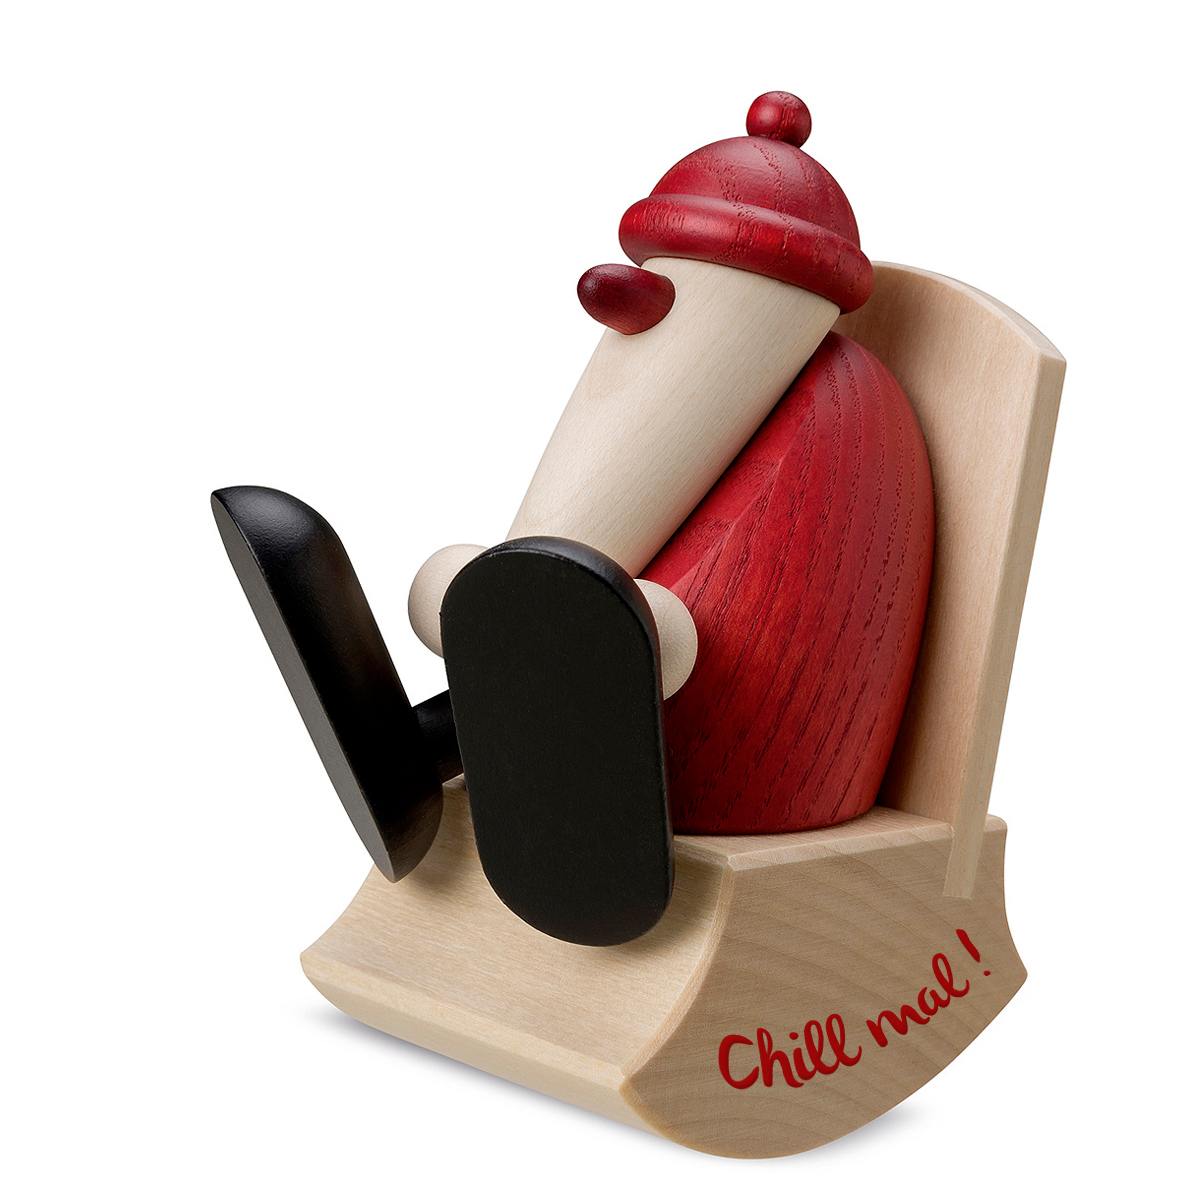 Santa Claus in a rocking chair, small